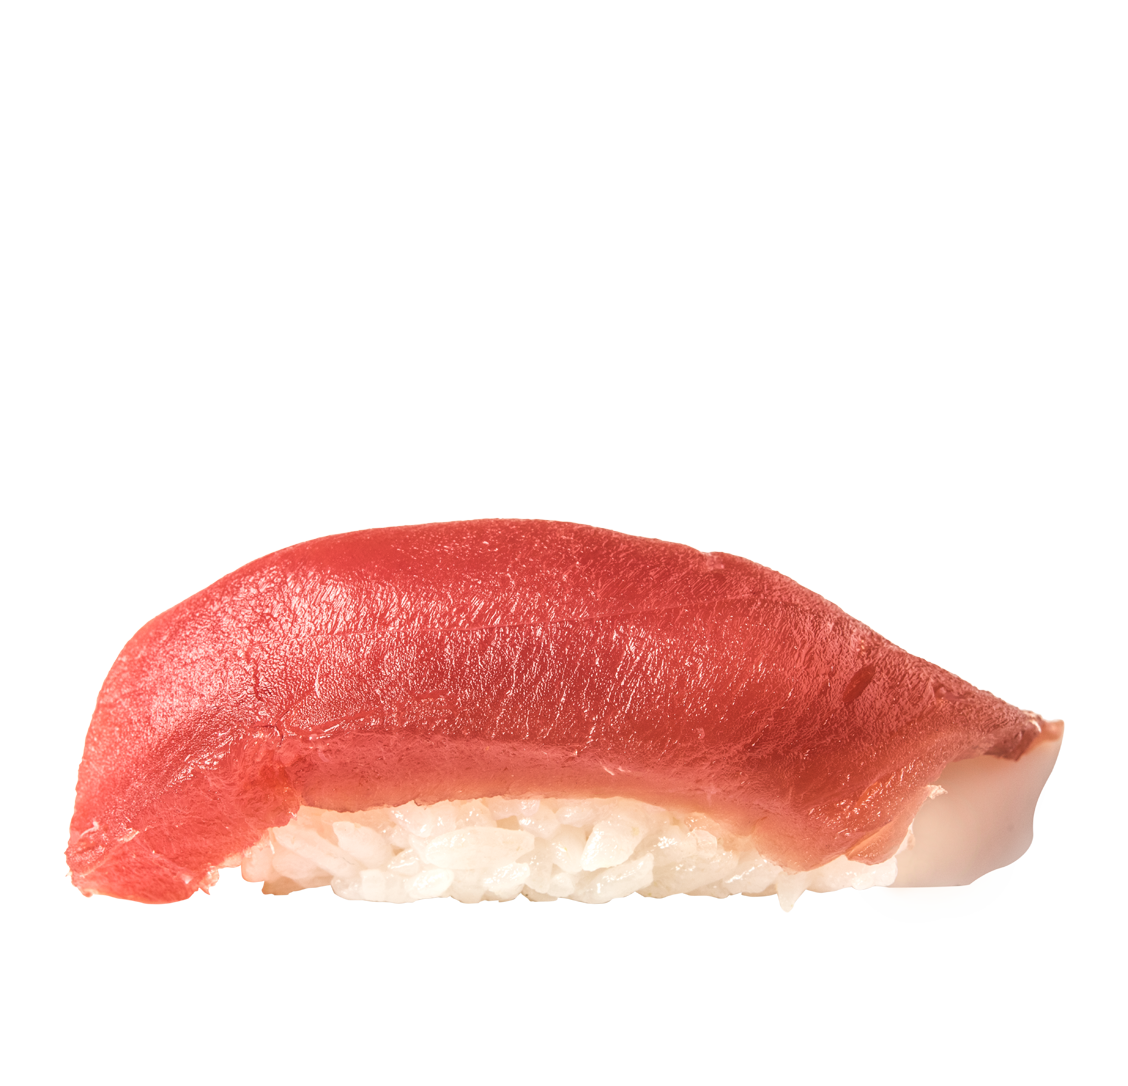 Tuna </br>2,50 € title=Tuna </br>2,50 €